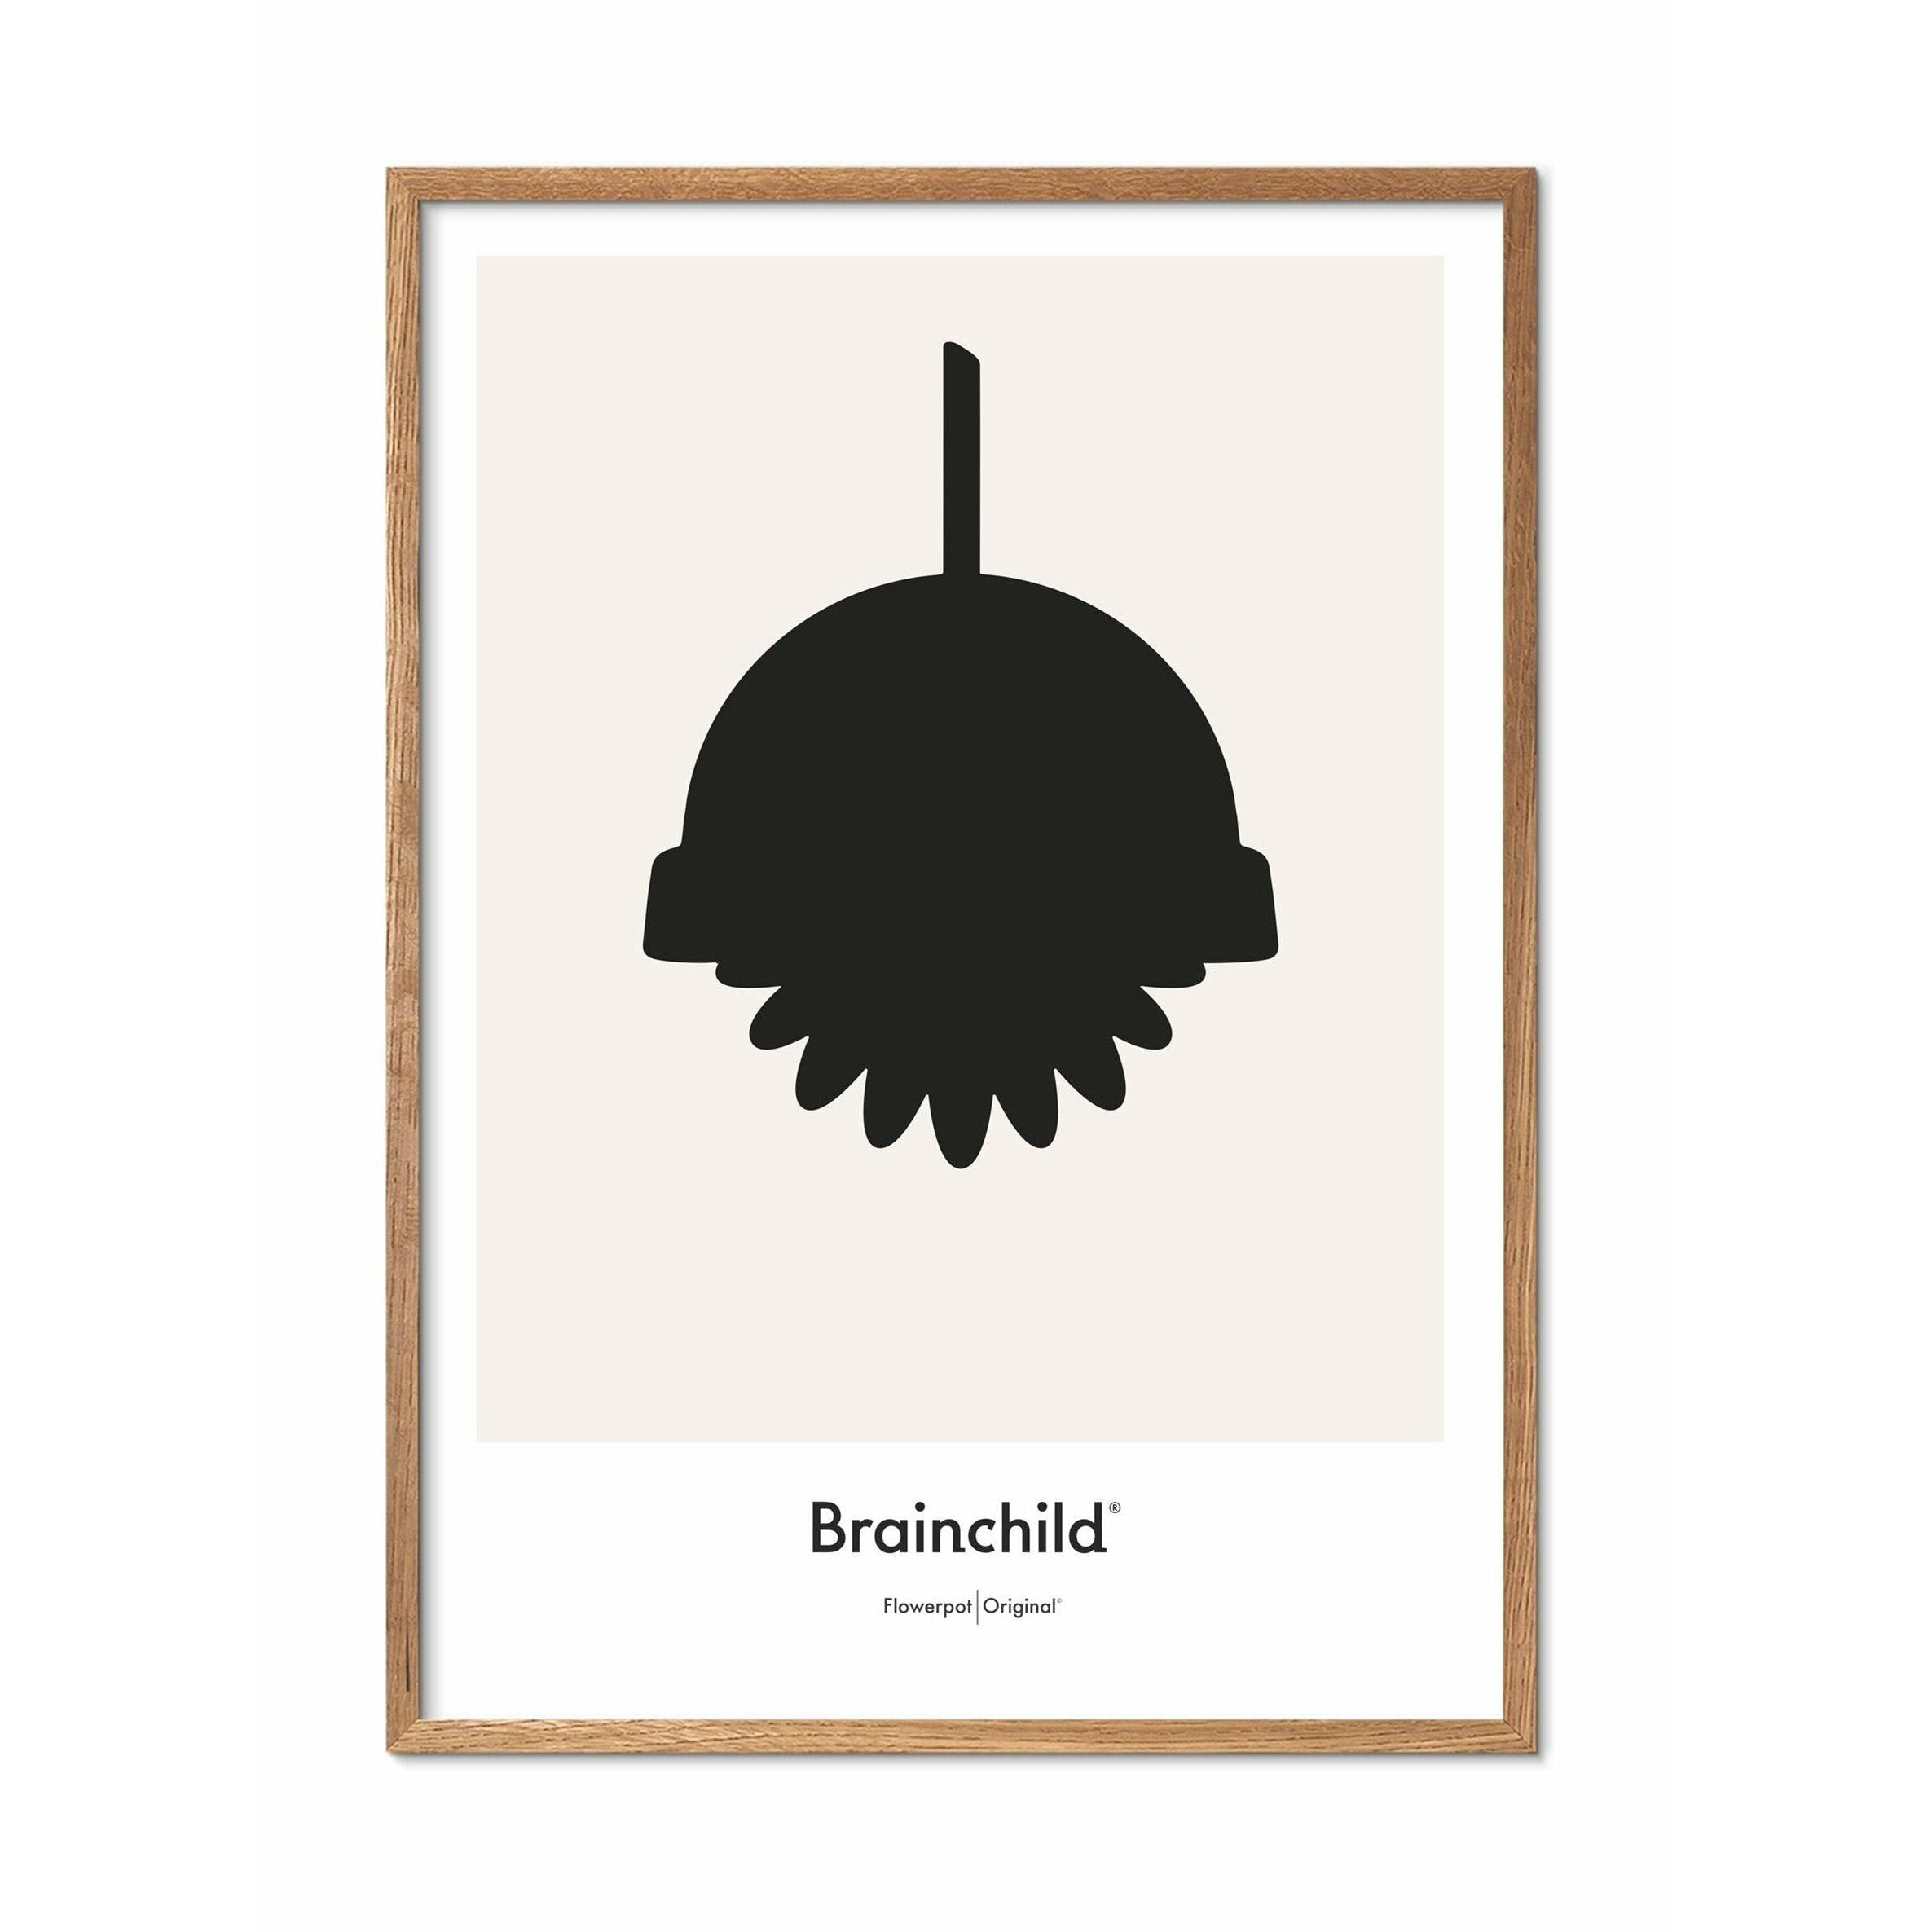 Brainchild Blumentopf Design Icon Poster, Rahmen aus hellem Holz 50x70 Cm, Grau